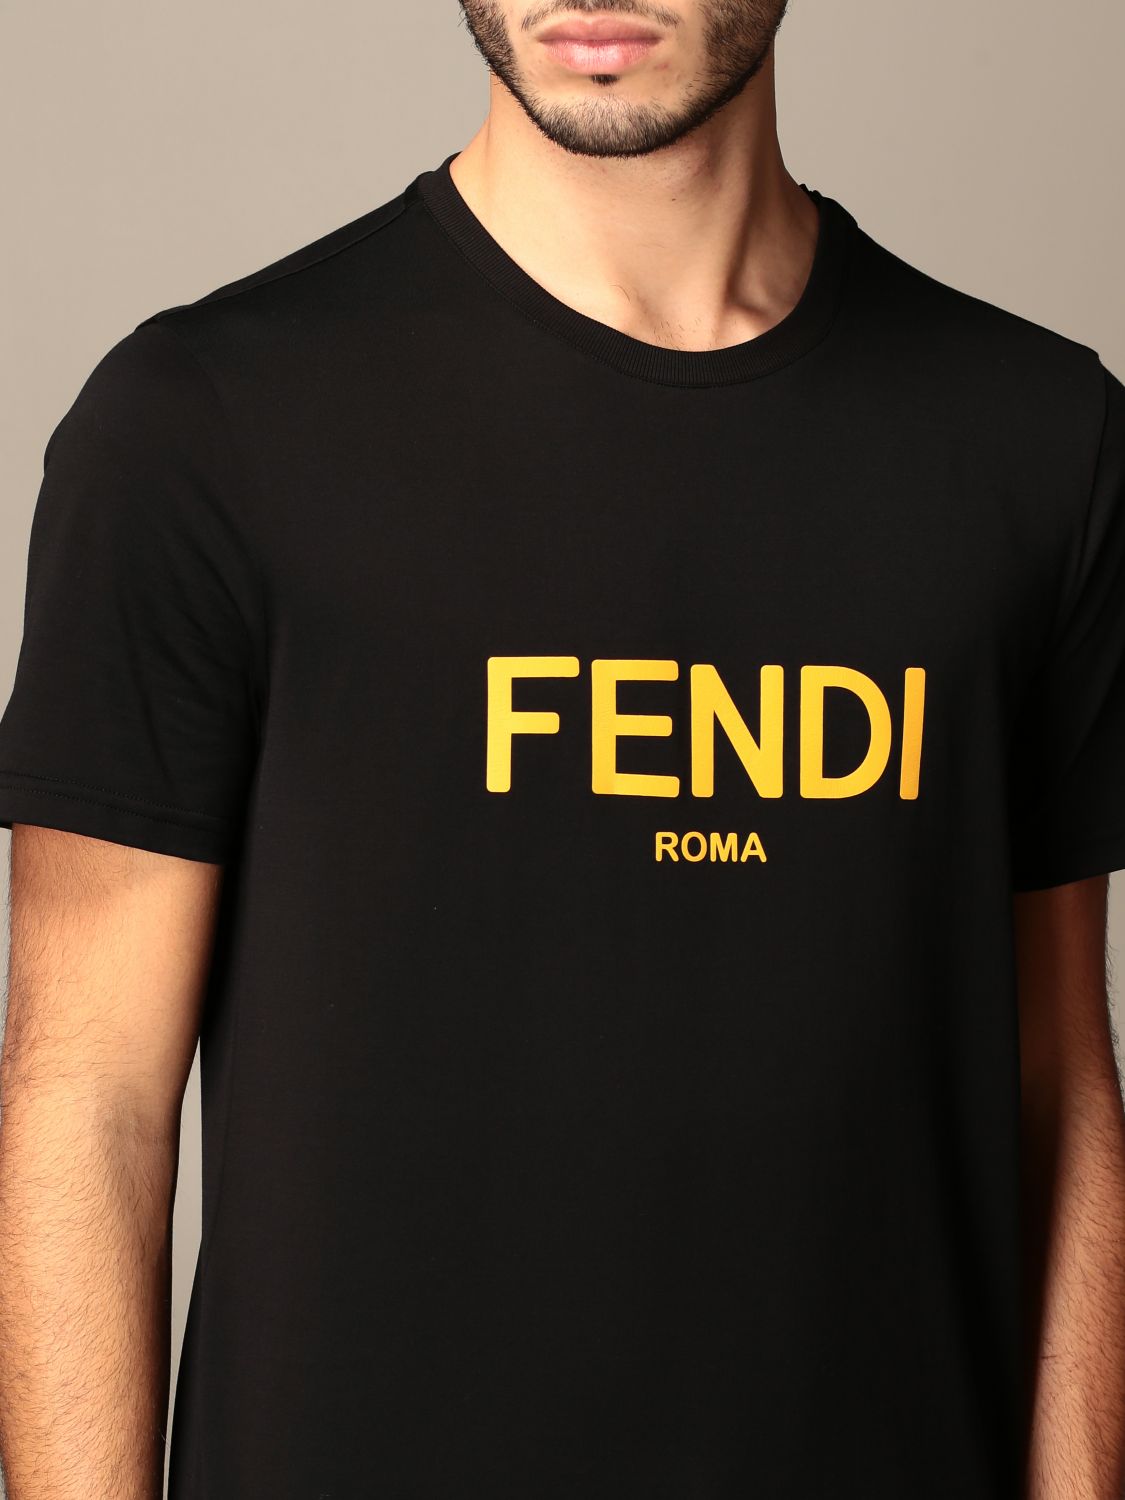 Fendi Color Man's T-Shirt Tee